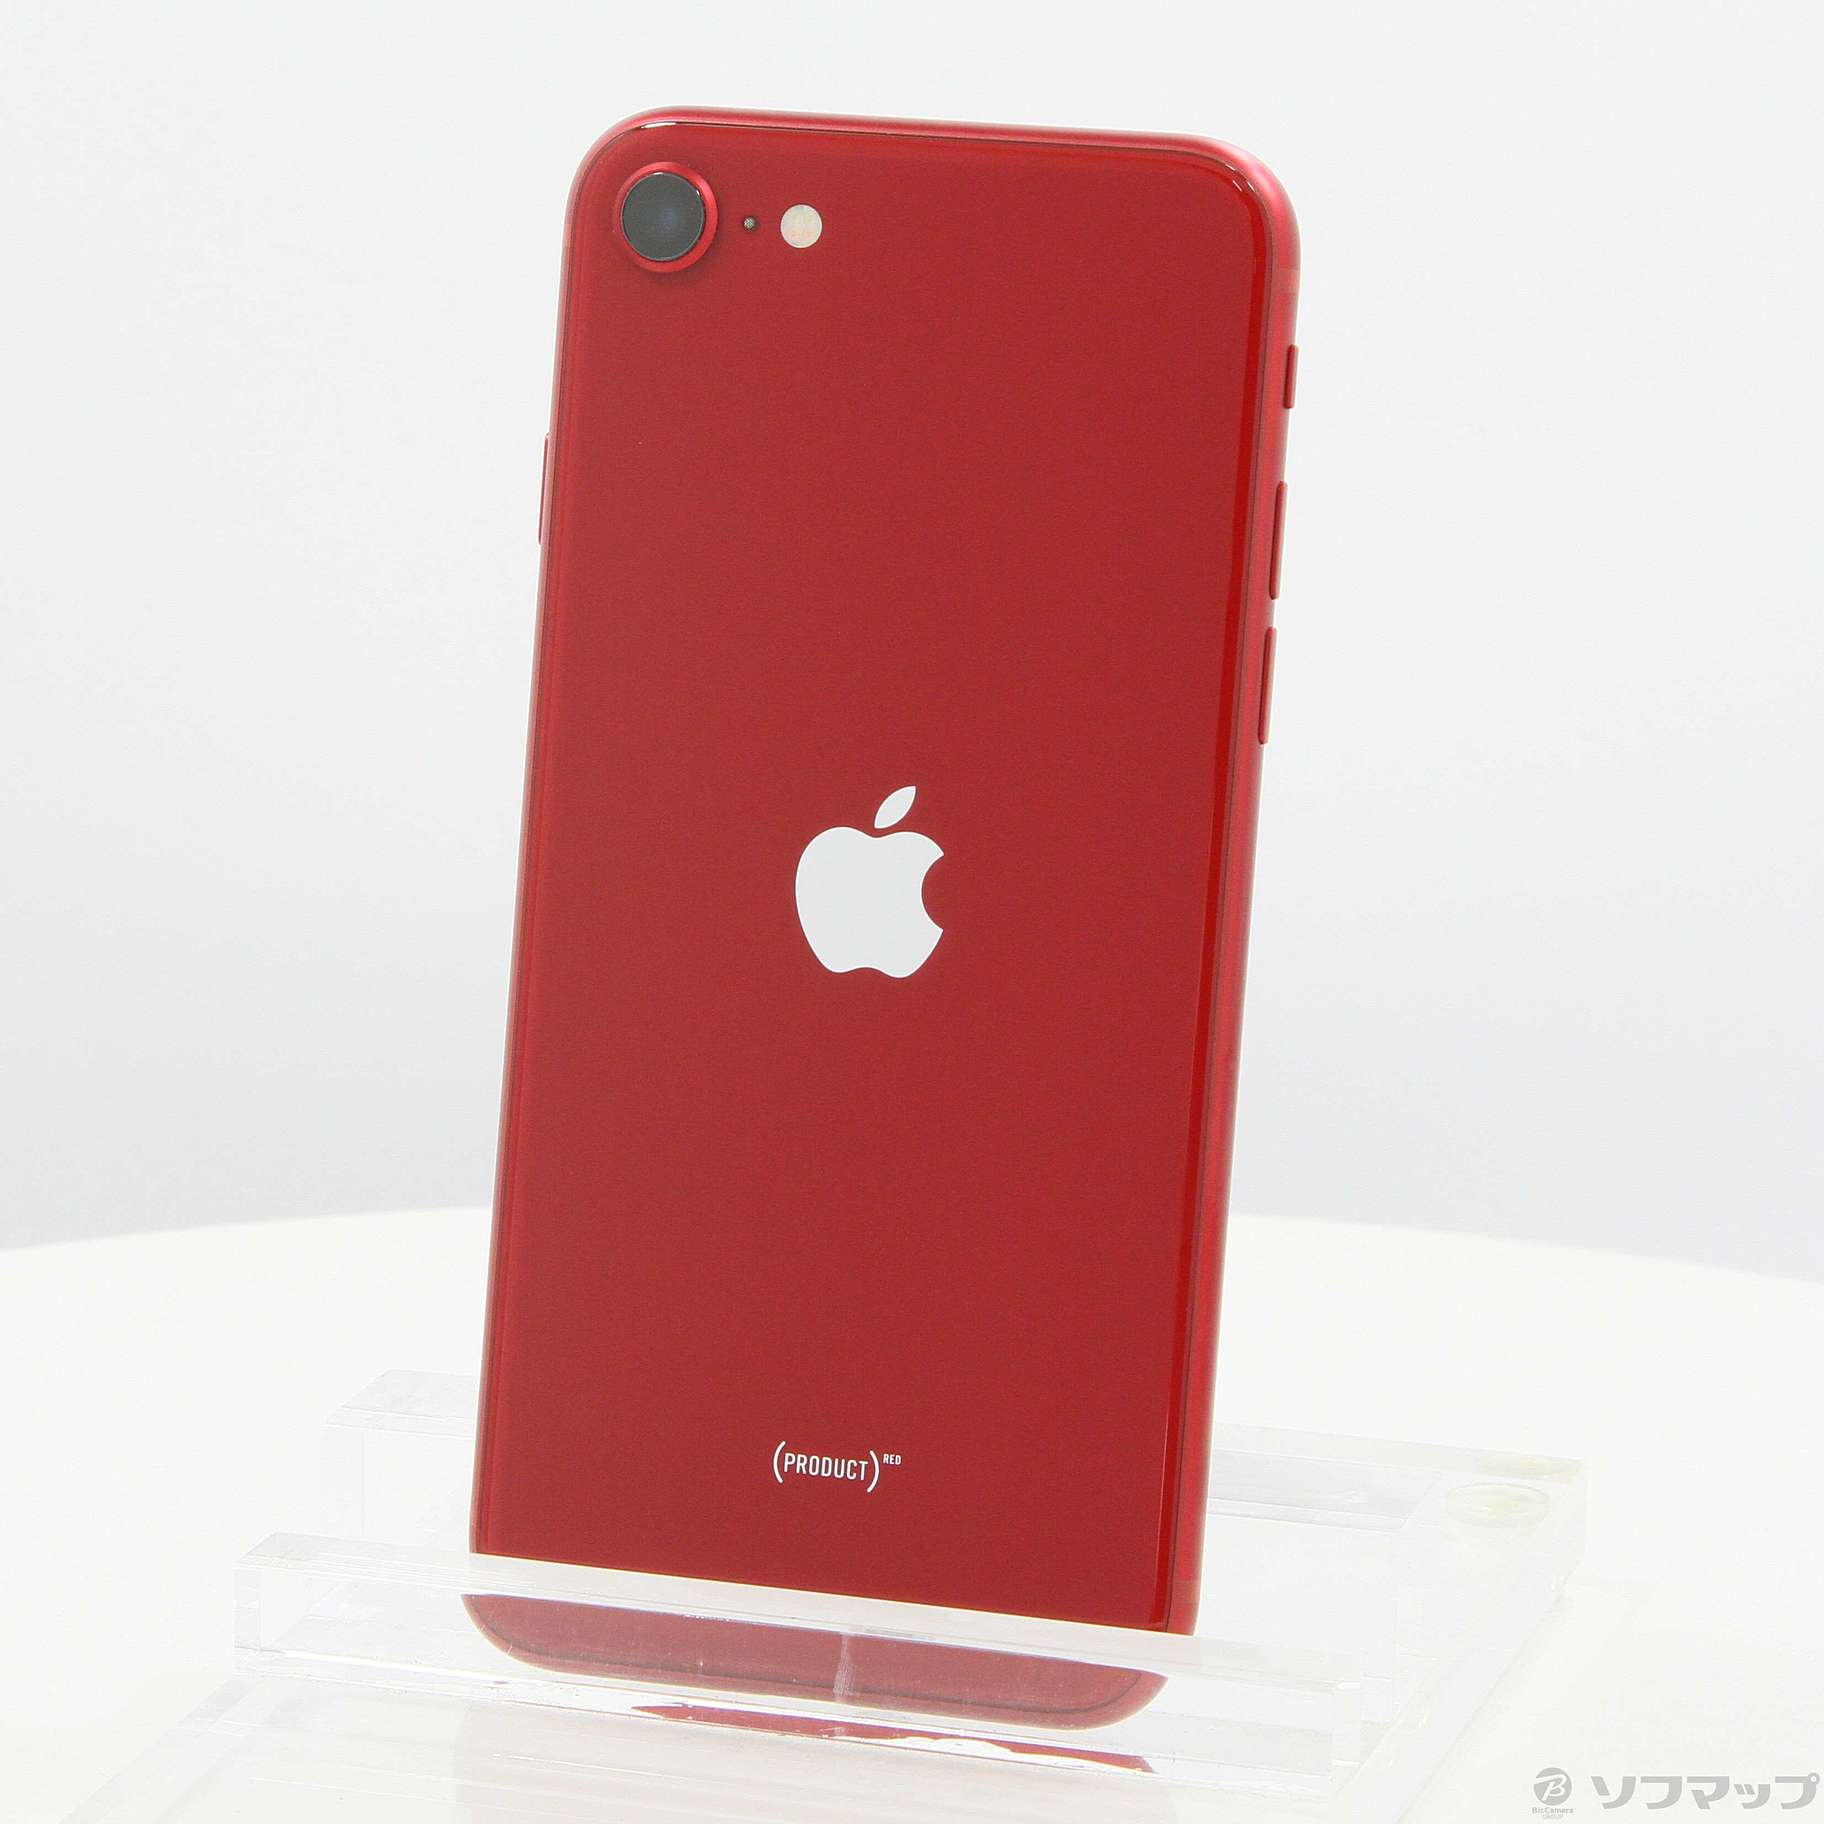 Apple iPhone SE 第3世代 64GB (PRODUCT)RED - www.sorbillomenu.com